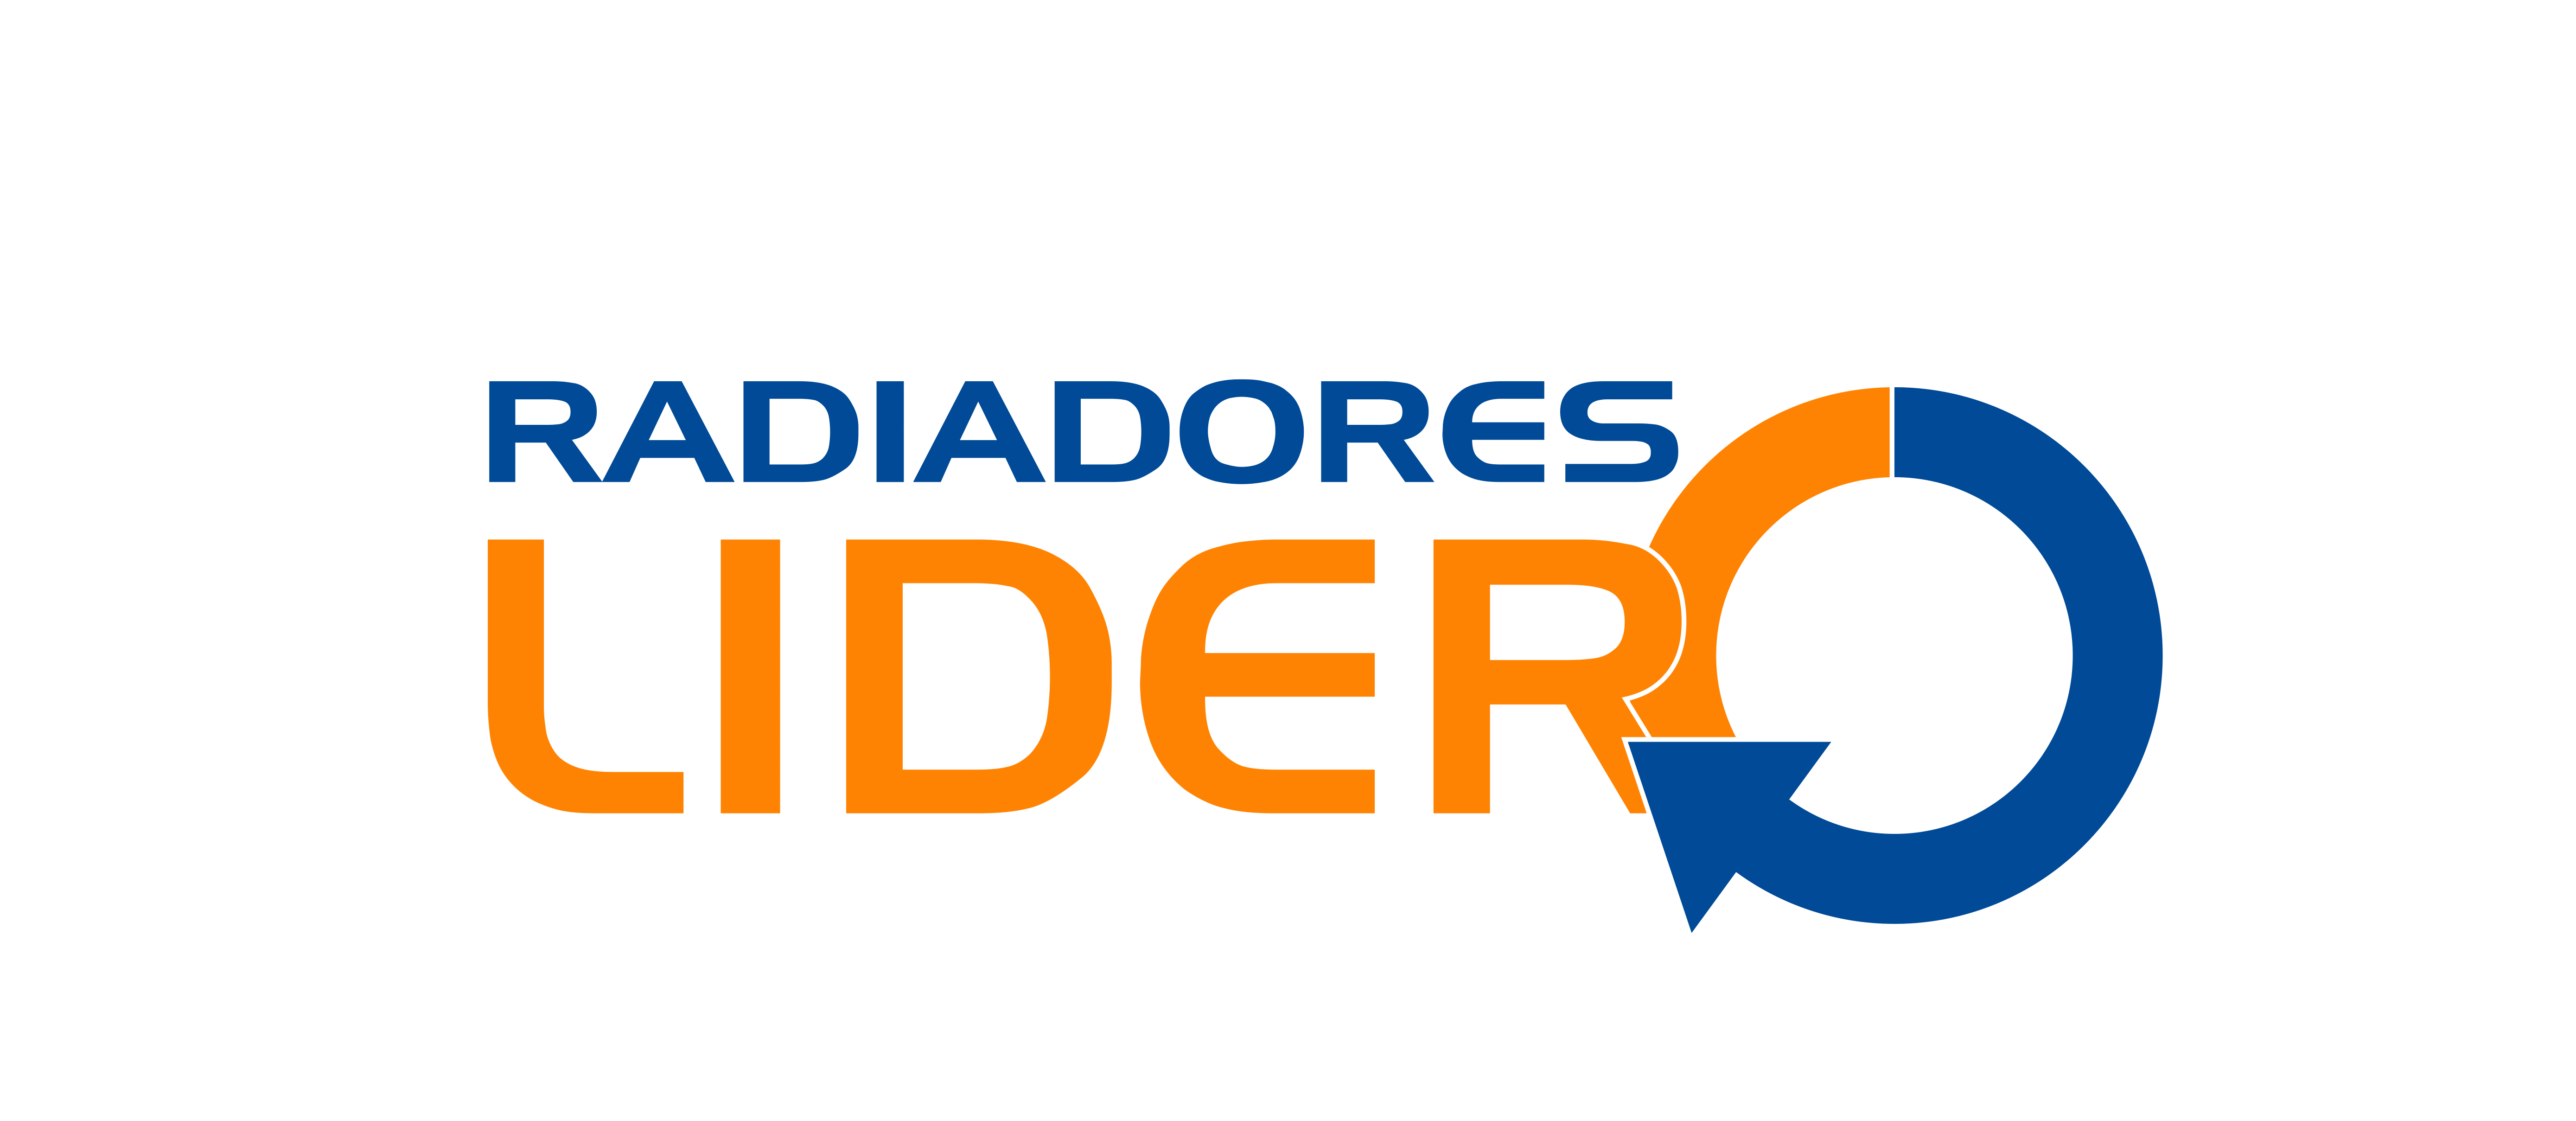 RADIADORES LIDER